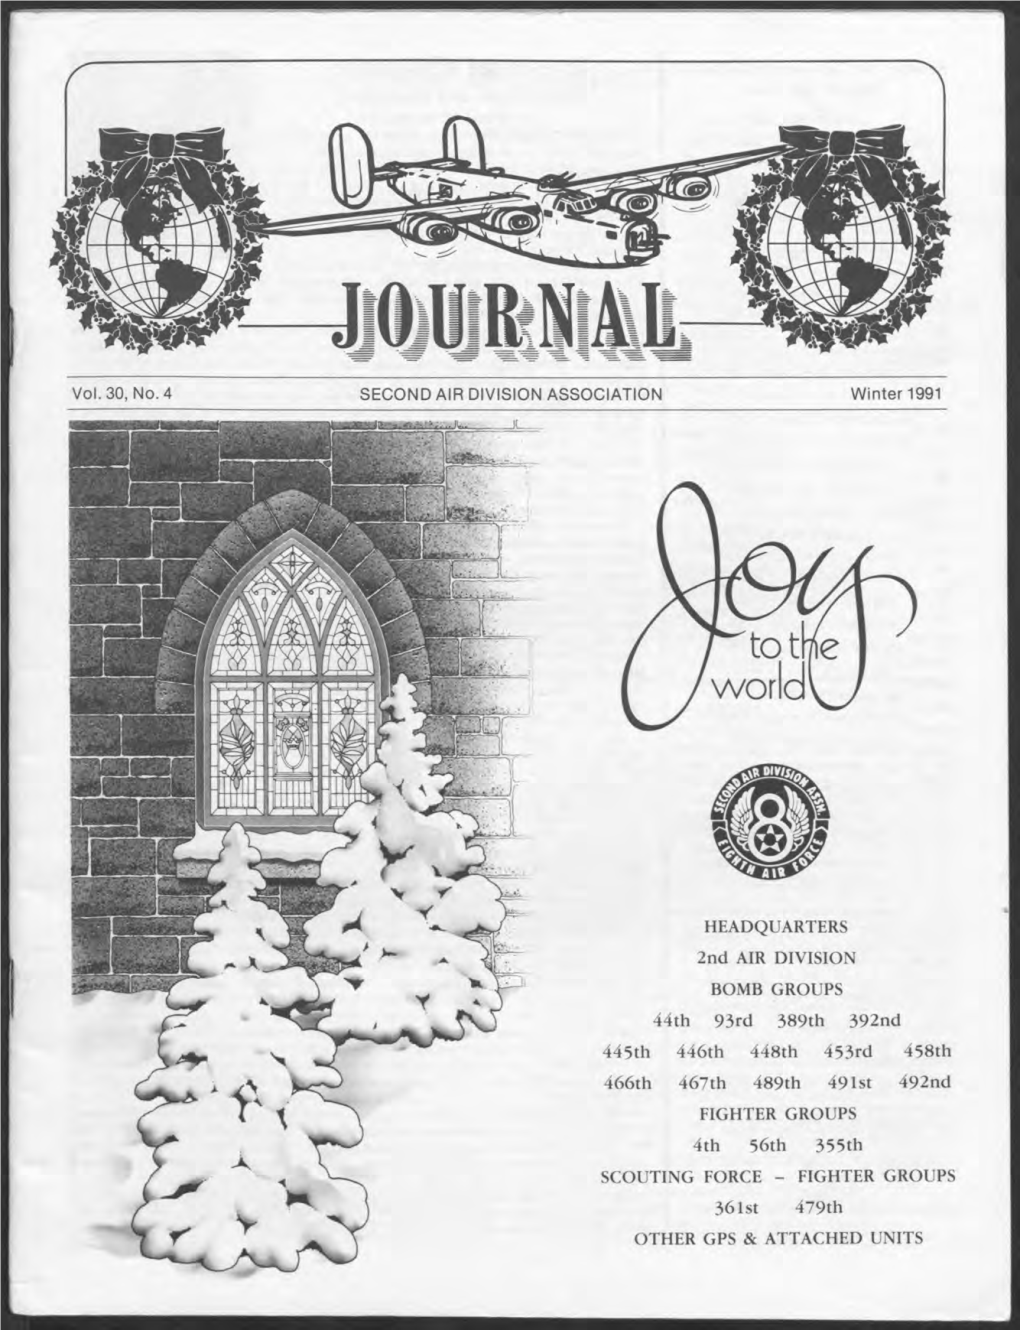 Vol. 30, No. 4 SECOND AIR DIVISION ASSOCIATION Winter 1991